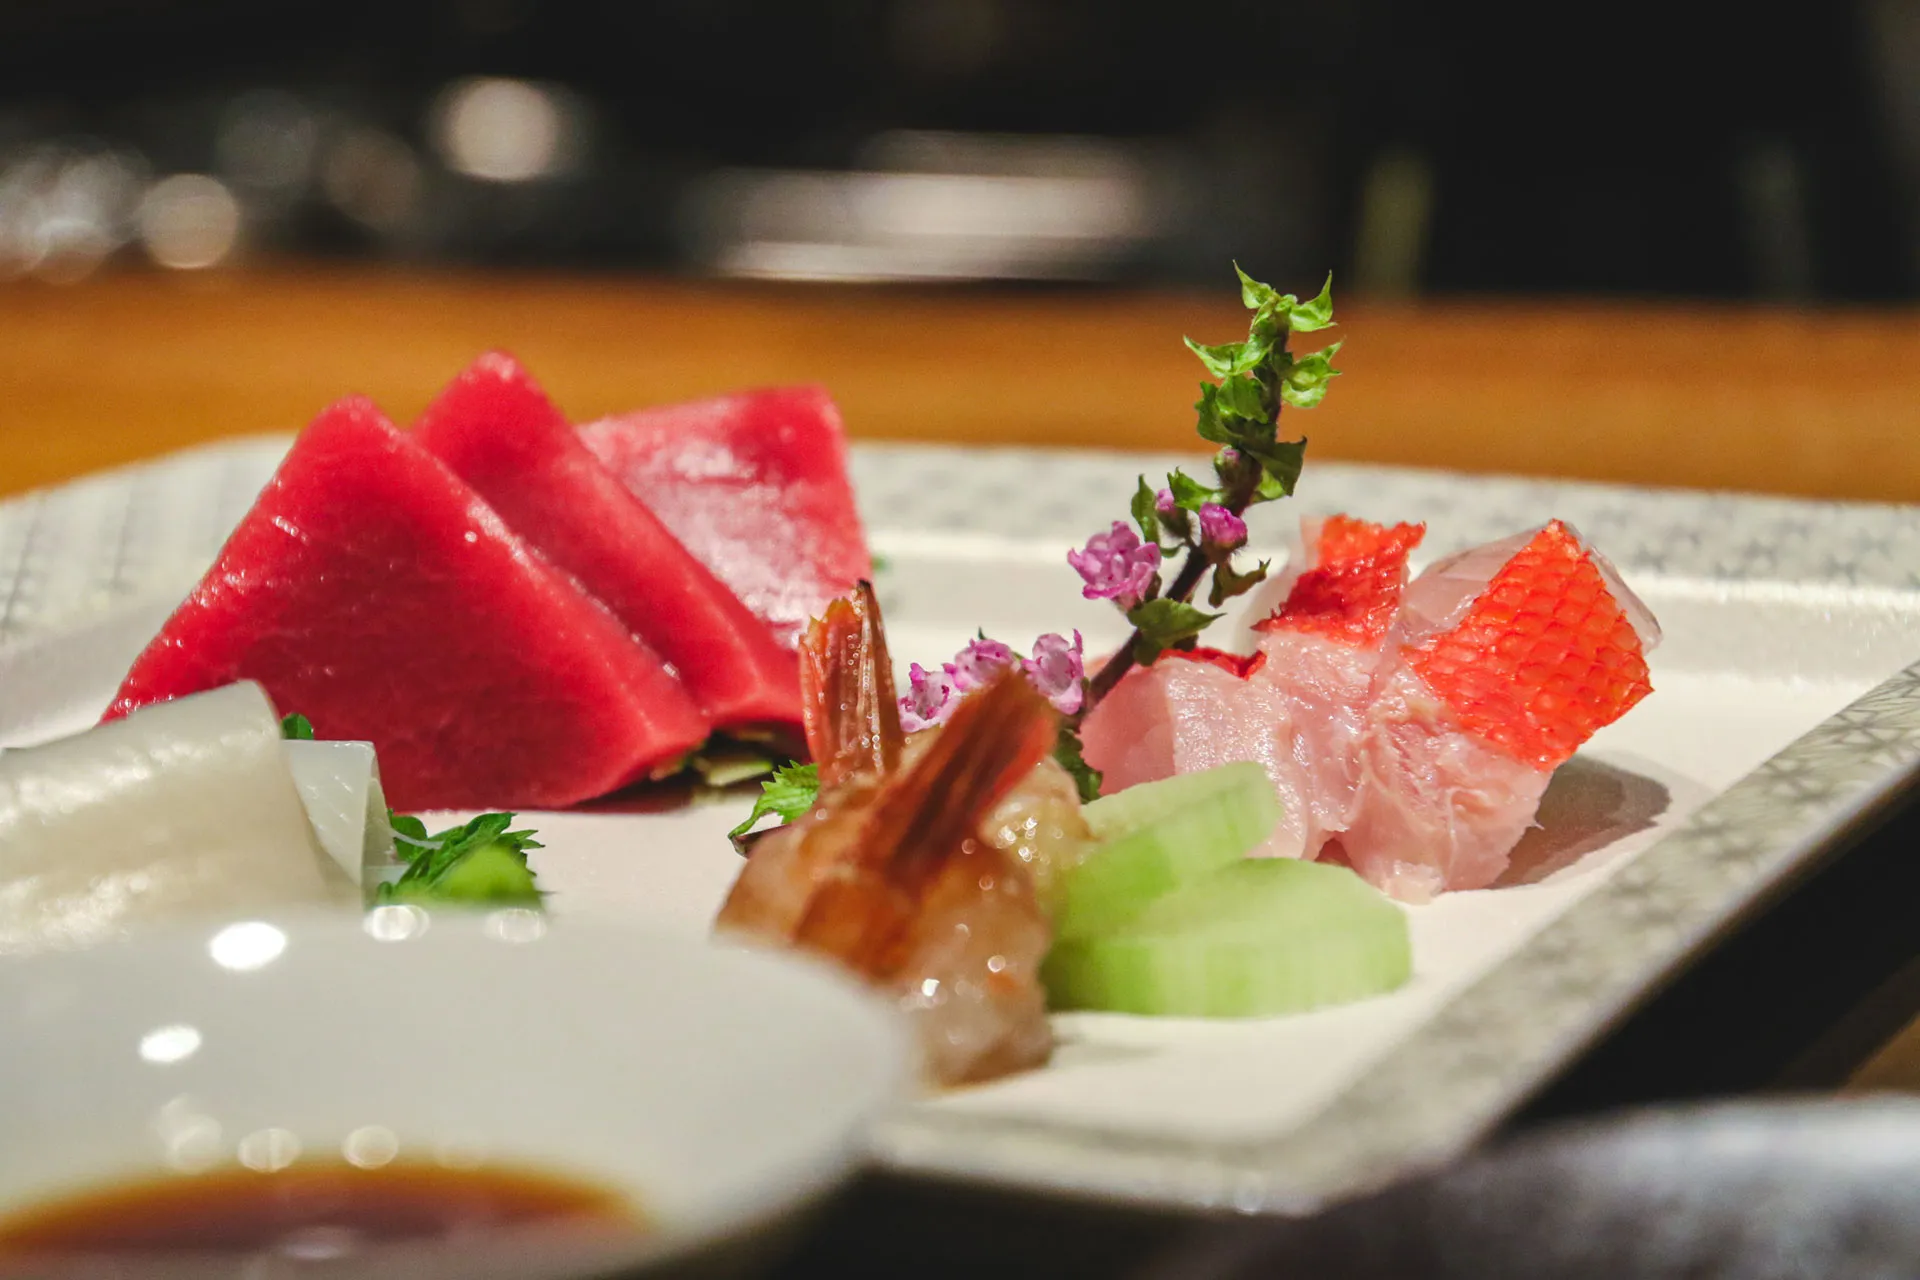 Learning sashimi (slices of raw fish)